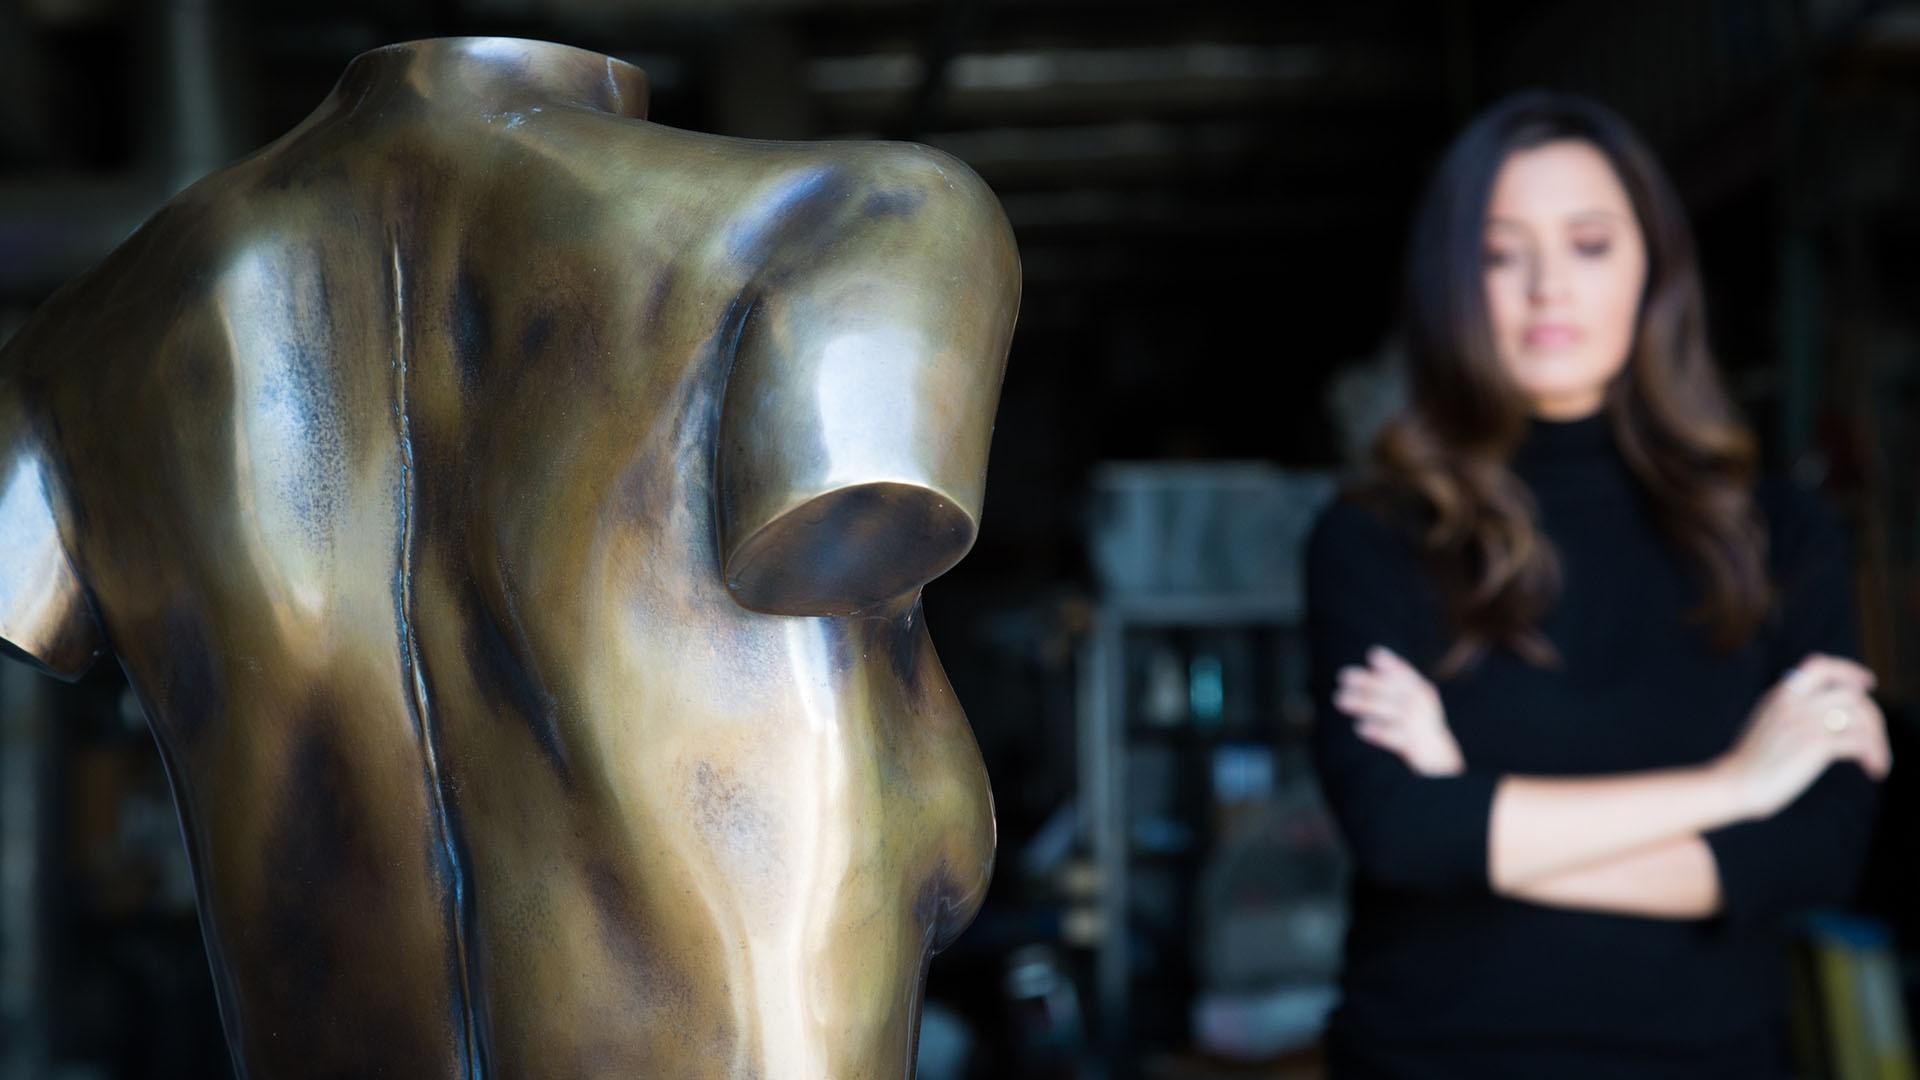 Alejandra Campoverdi contemplates the bronze sculpture of her torso.